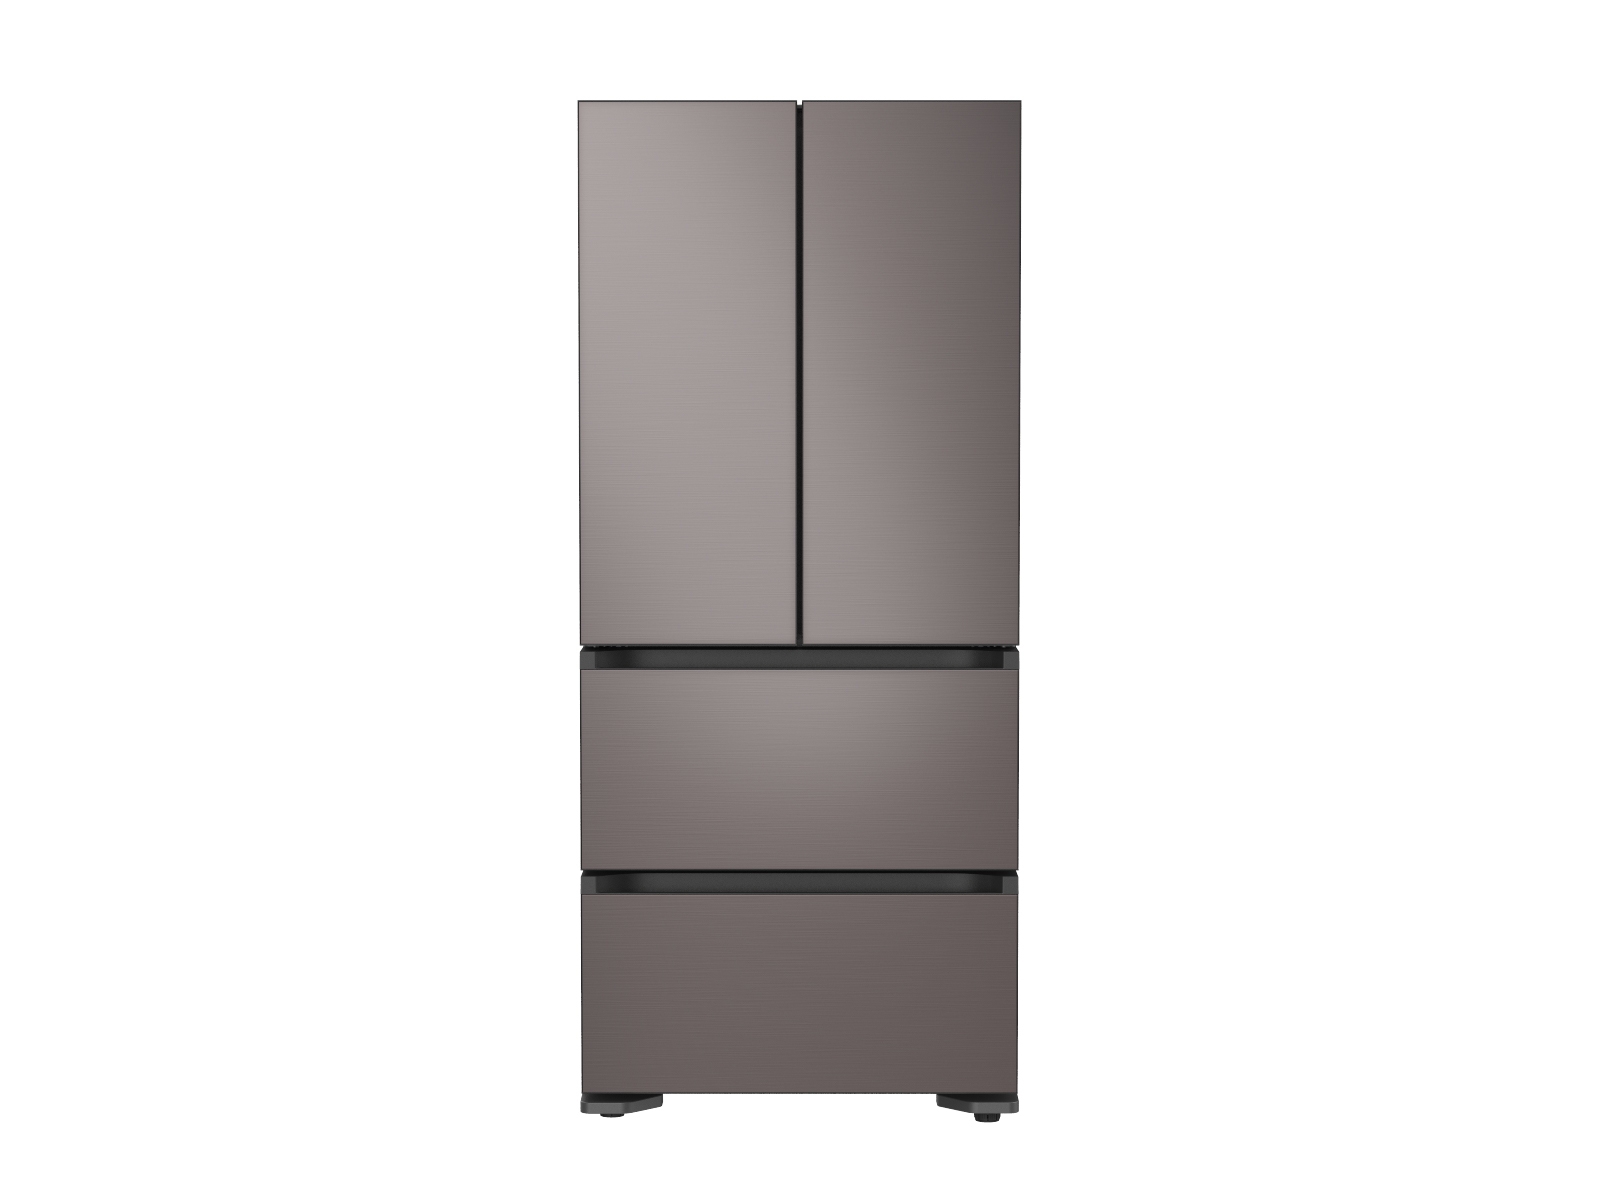 7.6 cu. ft. Kimchi & Specialty 2-Door Chest Refrigerator in Silver  Refrigerators - RP22T31137Z/AA, Samsung US